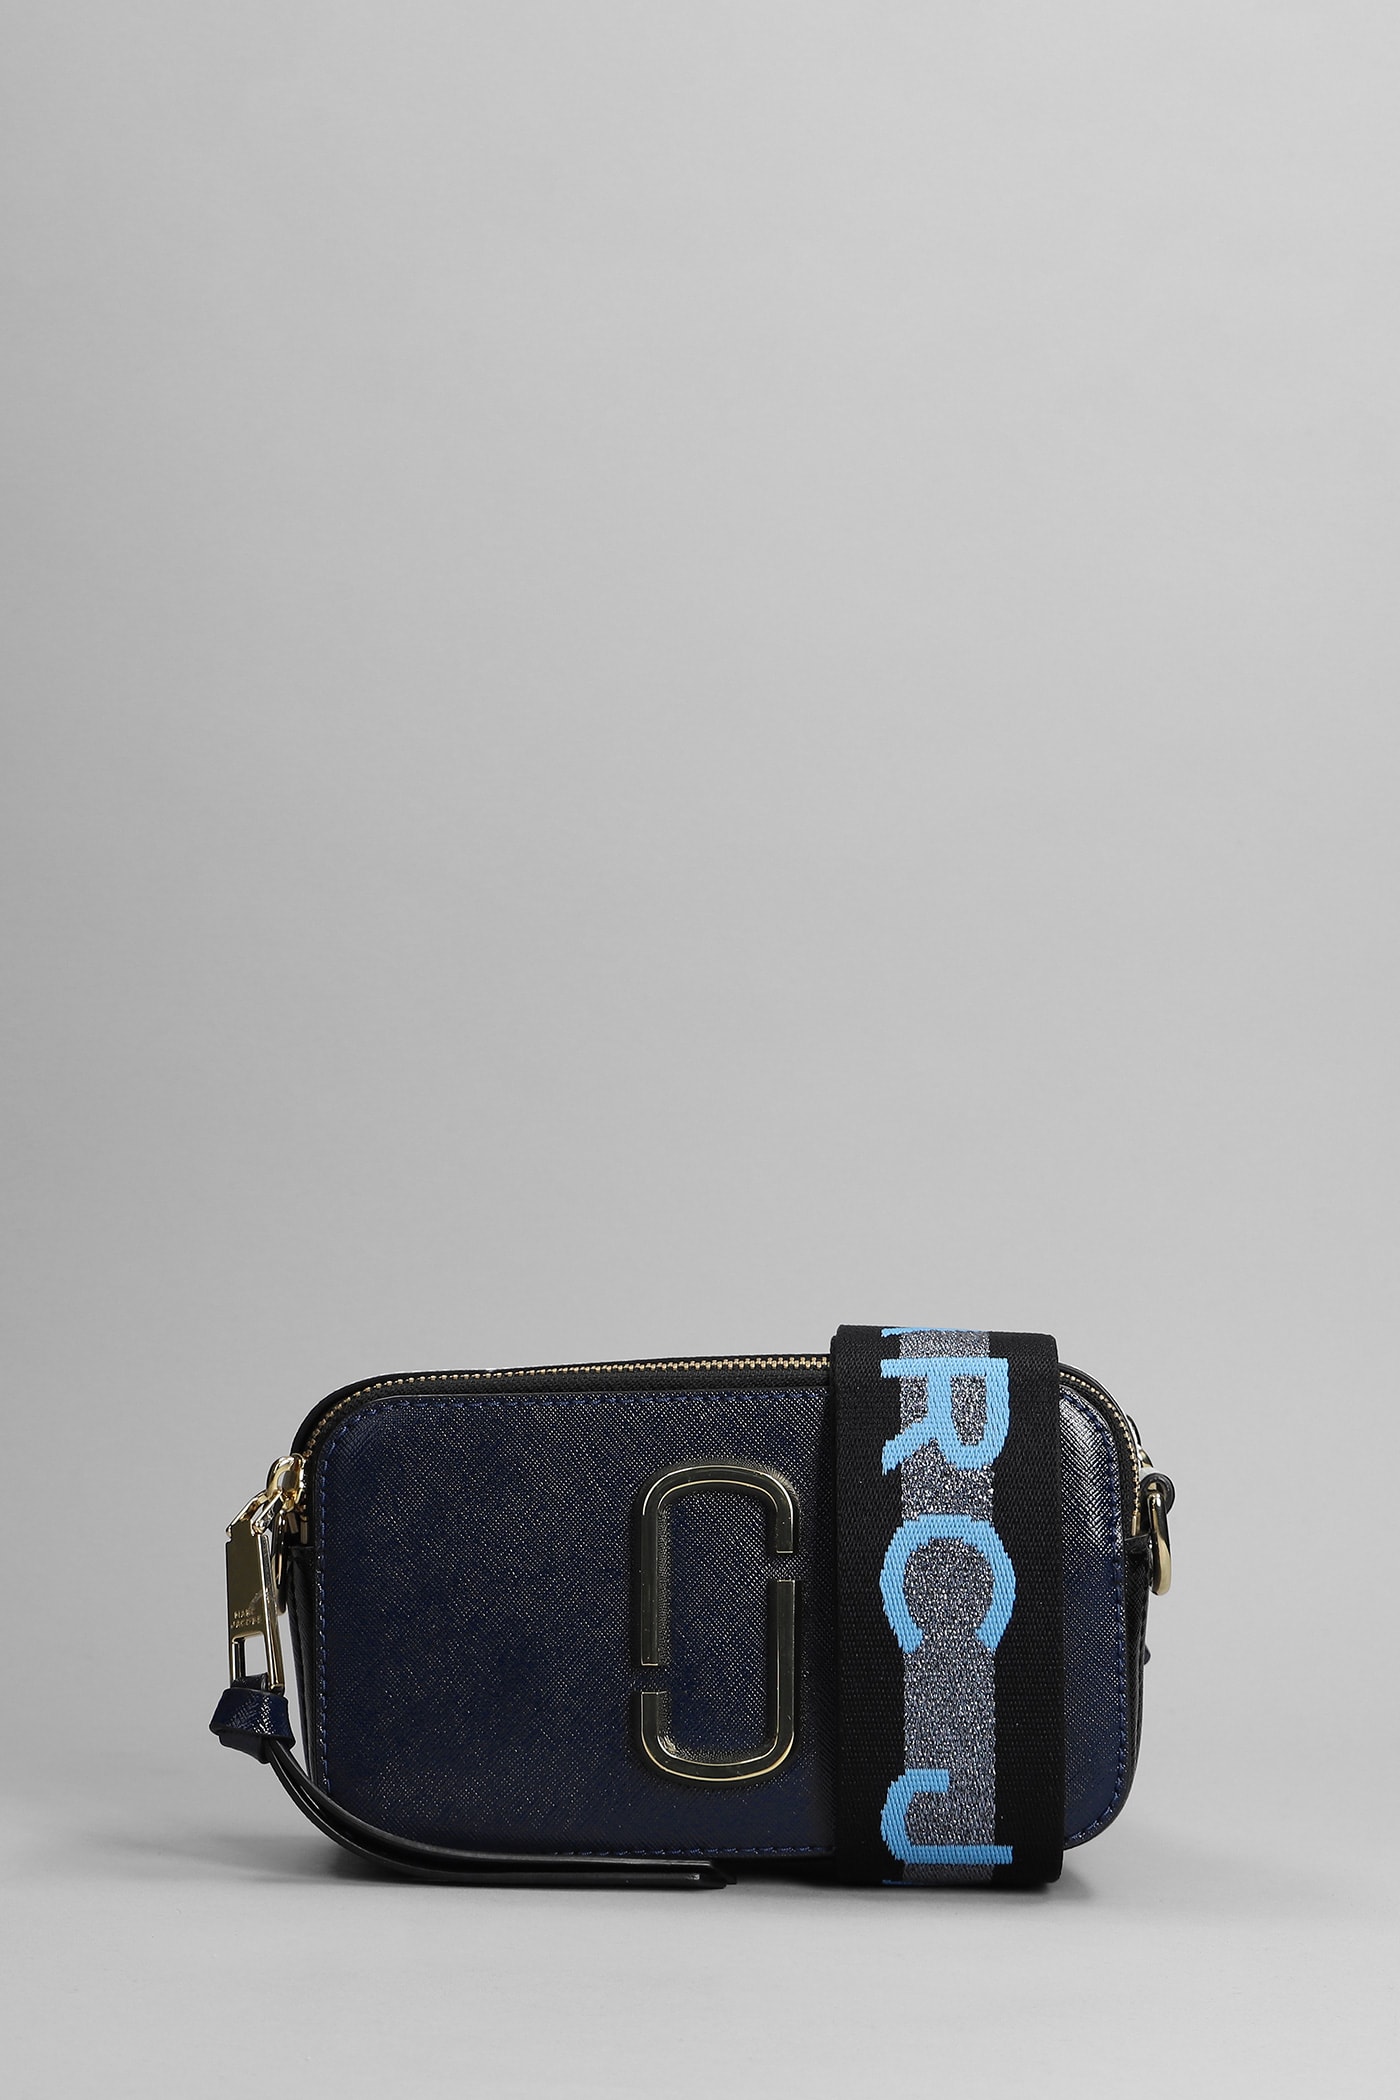 Marc Jacobs The Snapshot Shoulder Bag In Blue Leather